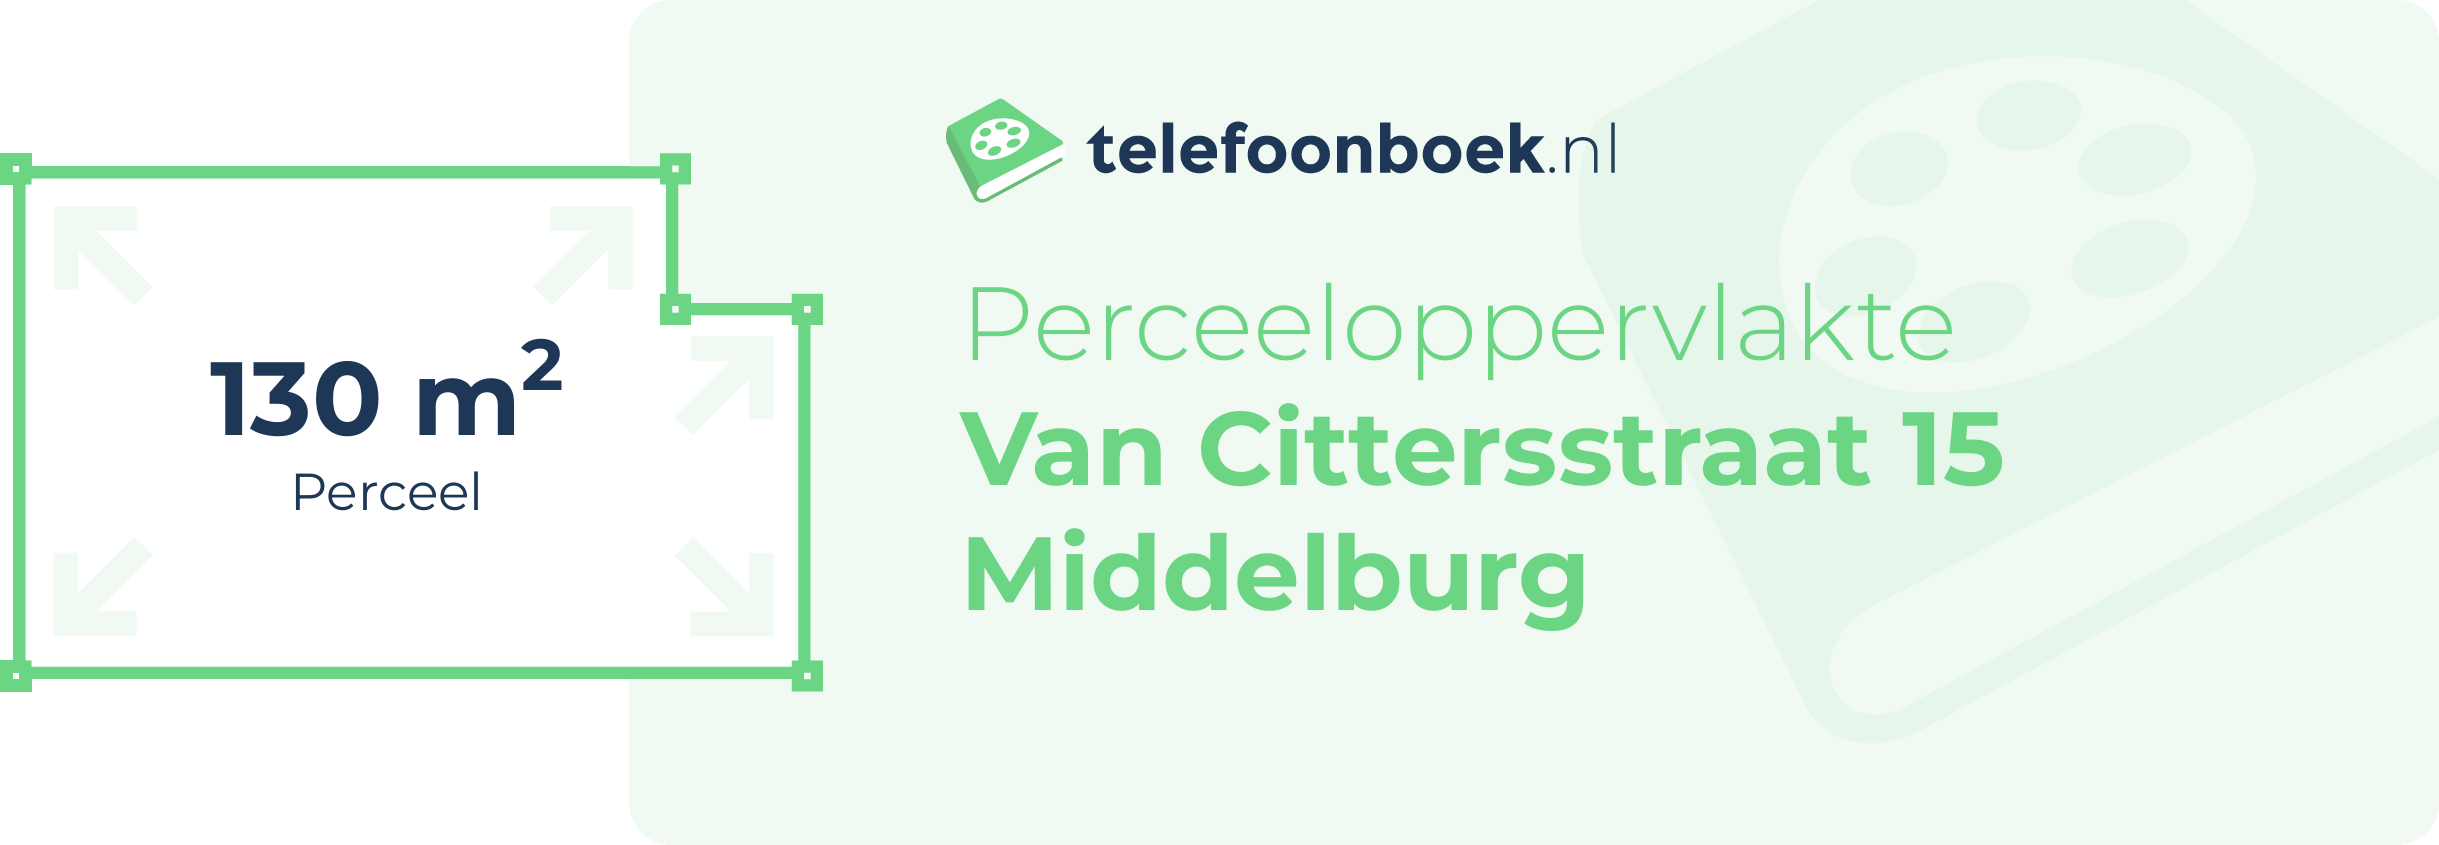 Perceeloppervlakte Van Cittersstraat 15 Middelburg